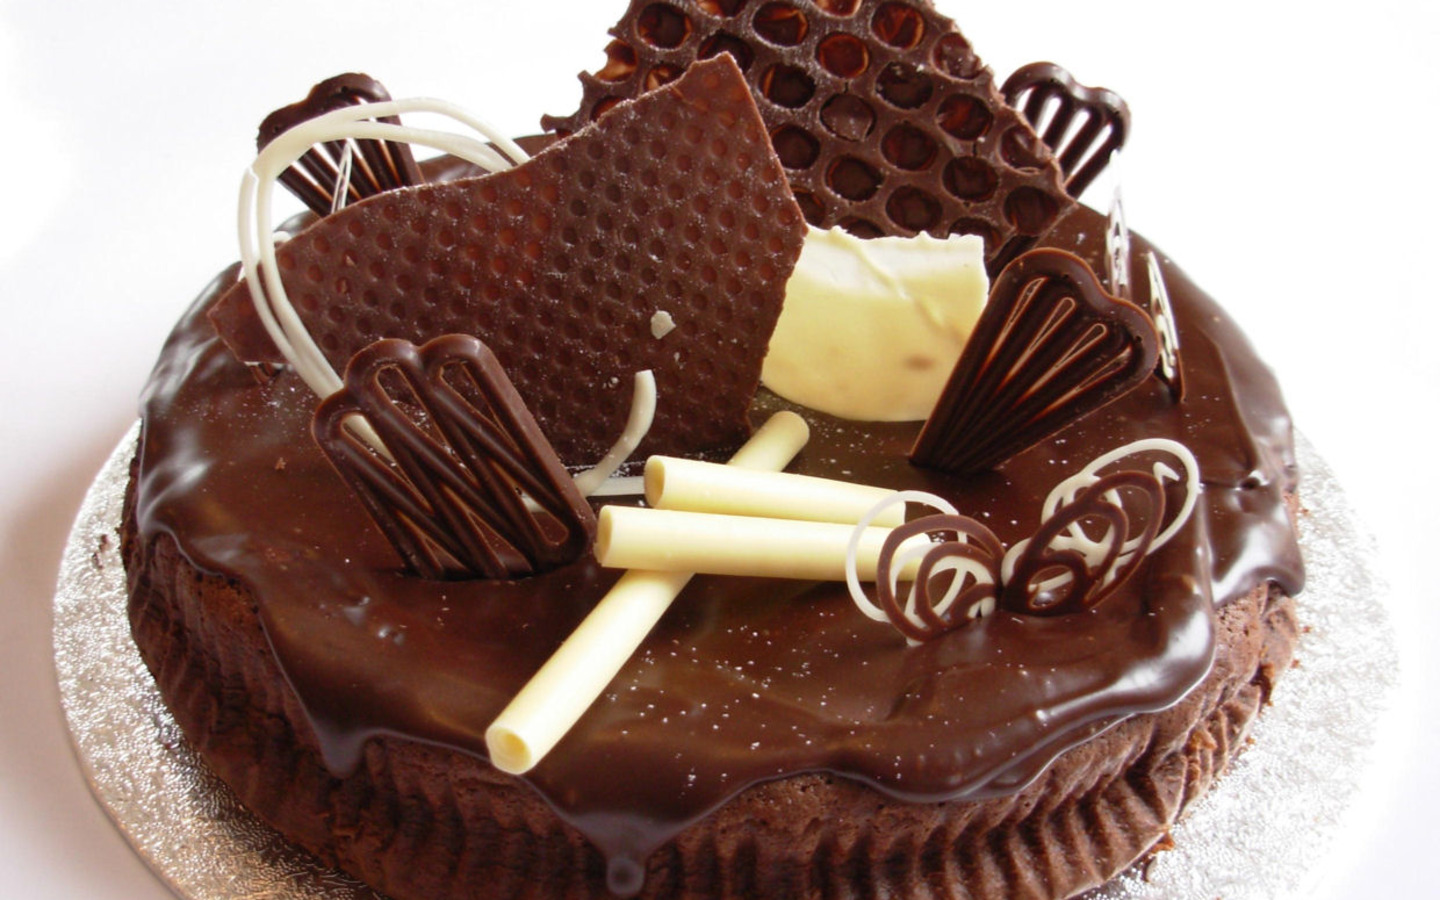 General 1440x900 cake food chocolate cake chocolate